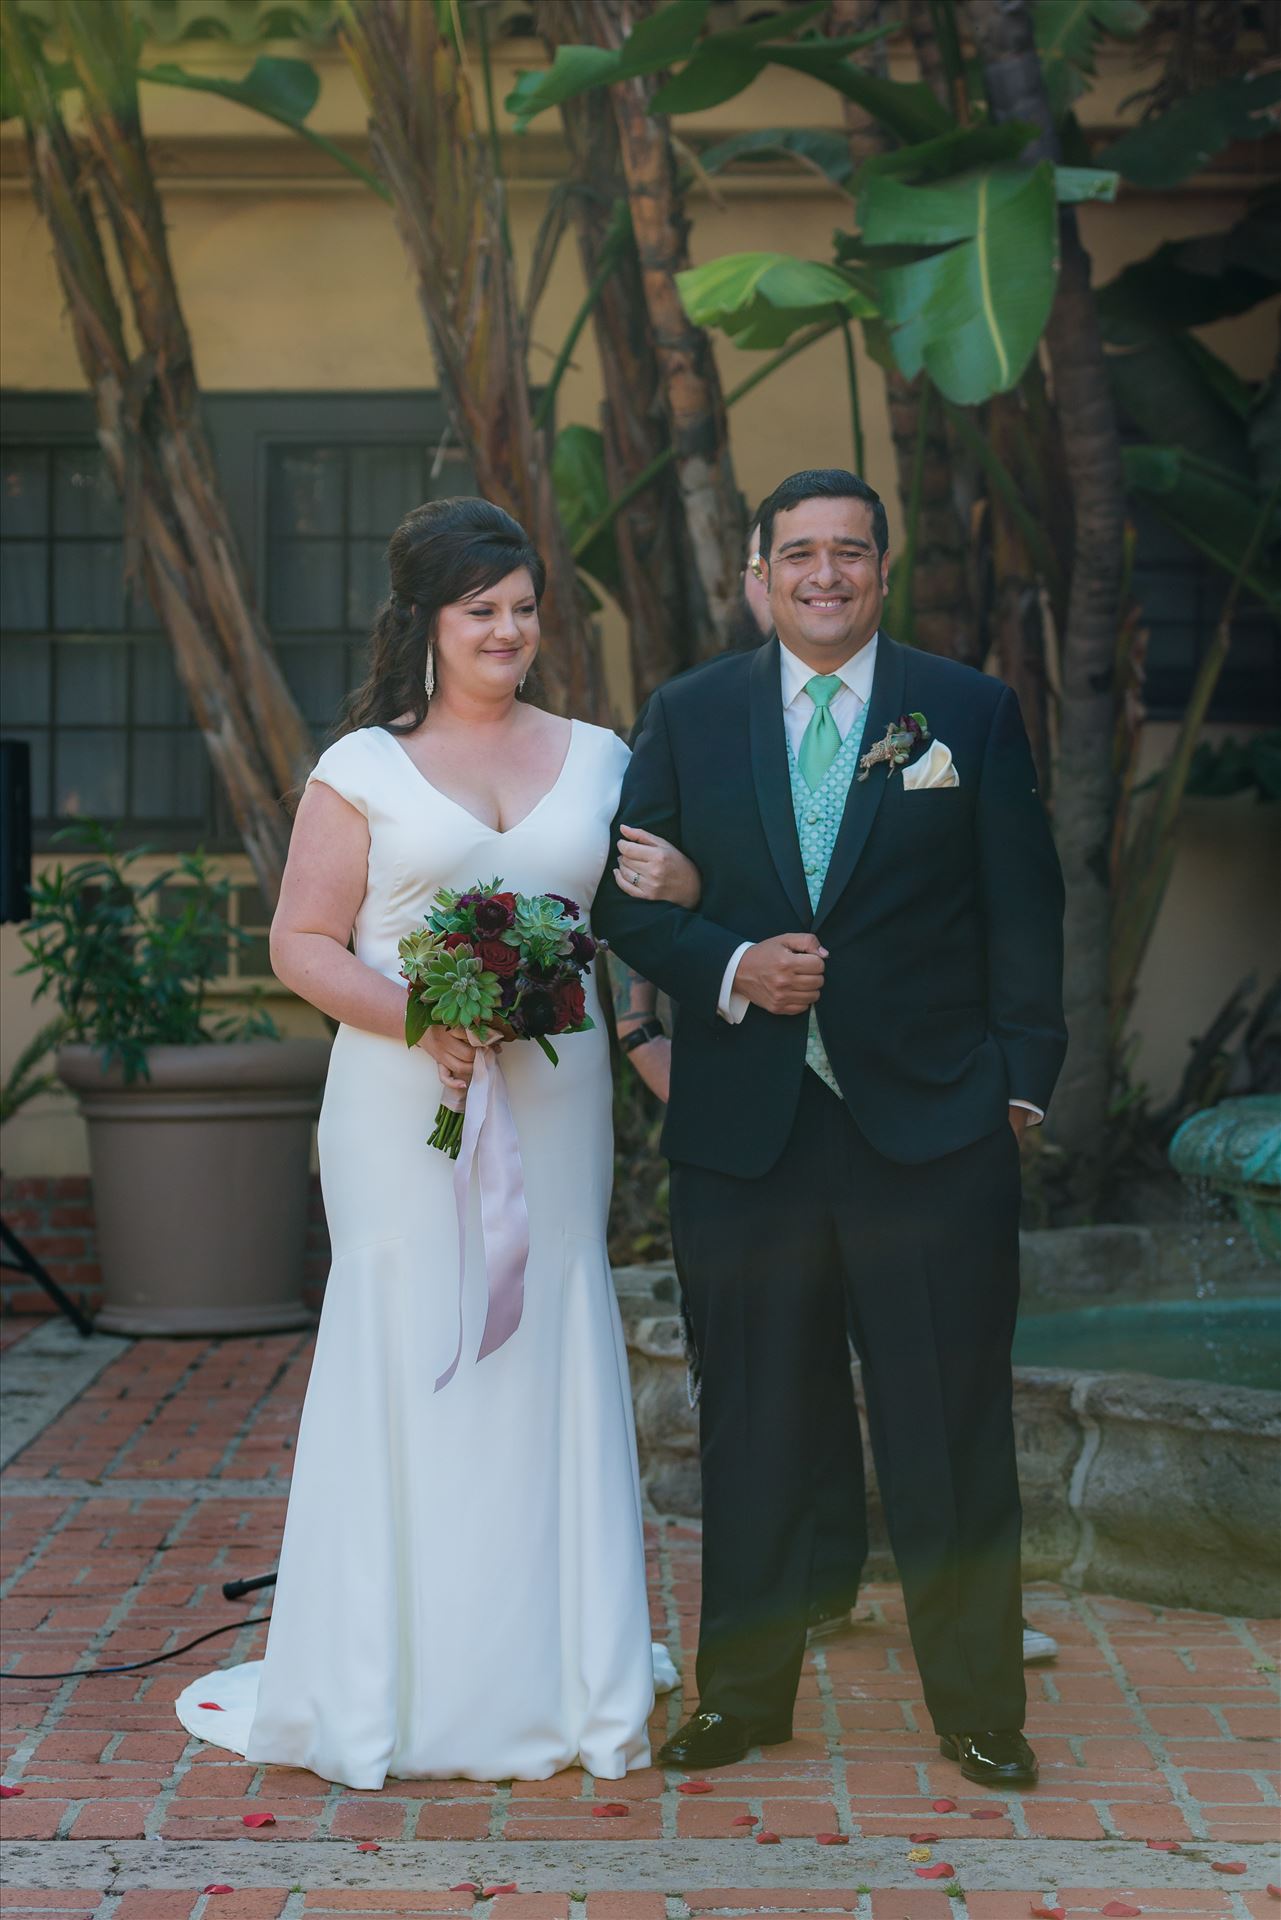 Mary and Alejandro 26 - Wedding photography at the Historic Santa Maria Inn in Santa Maria, California by Mirror's Edge Photography. After saying I Do. by Sarah Williams